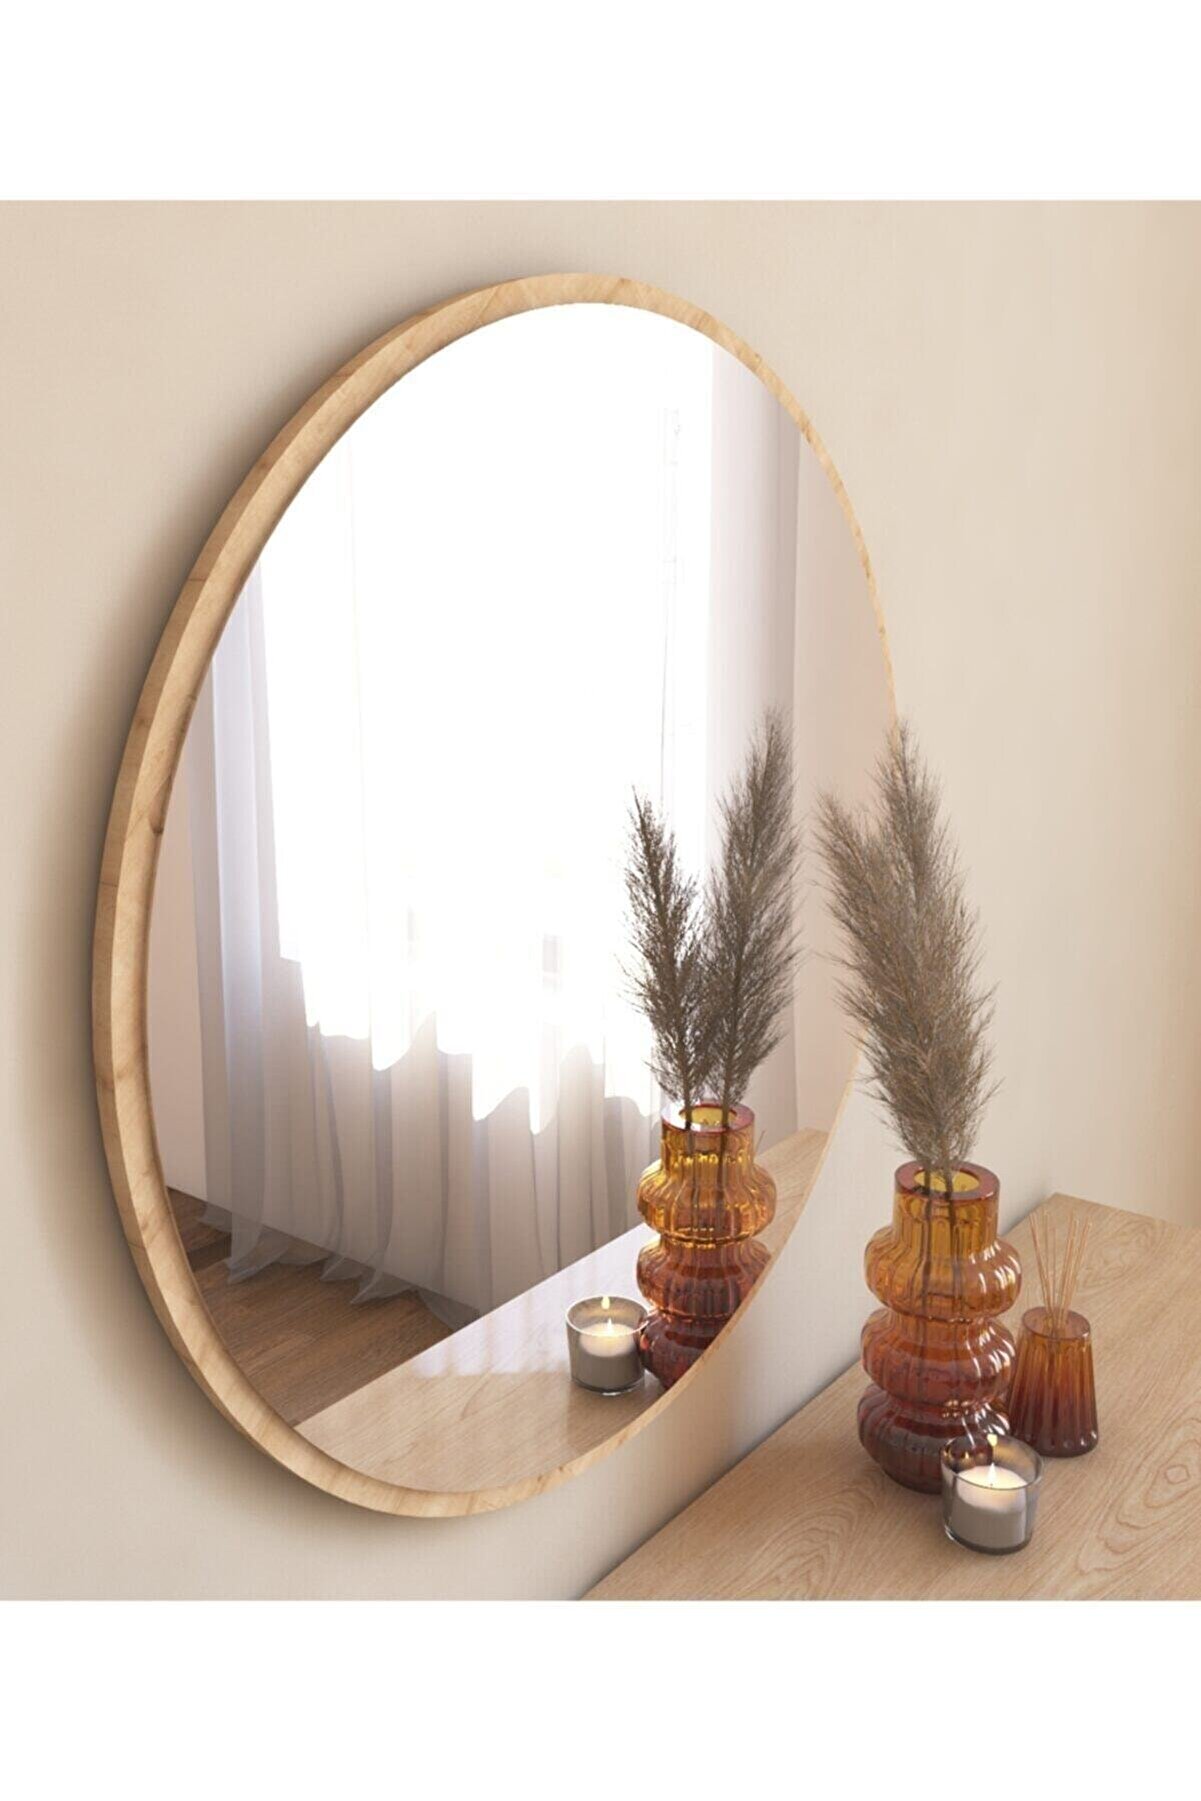 MONEayna Dekoratif Yuvarlak Ayna Natural Antre Hol Koridor Duvar Salon Mutfak Banyo Wc Ofis Aynası Mg301